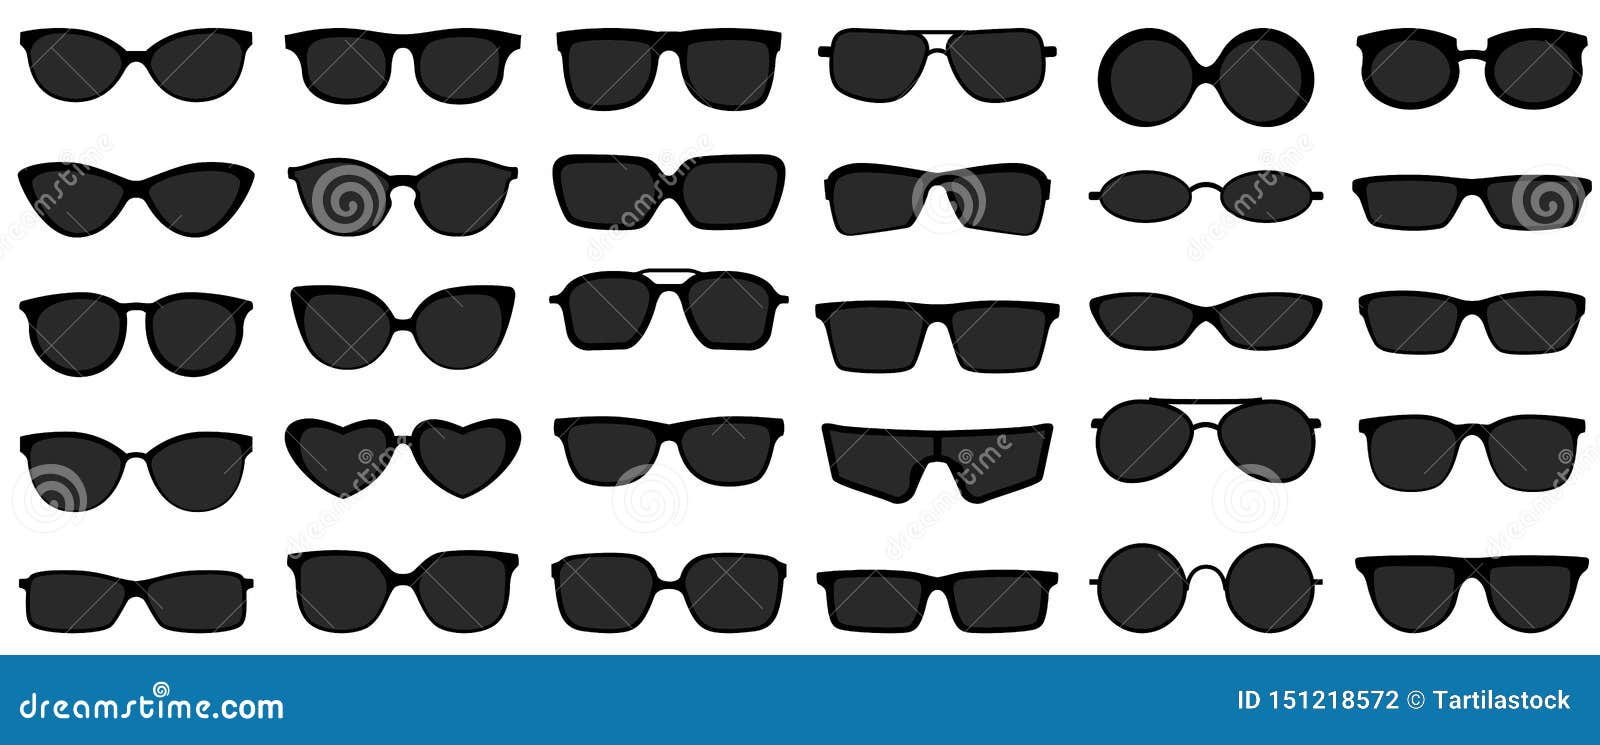 sunglasses icons. black sunglass, mens glasses silhouette and retro eyewear icon  set